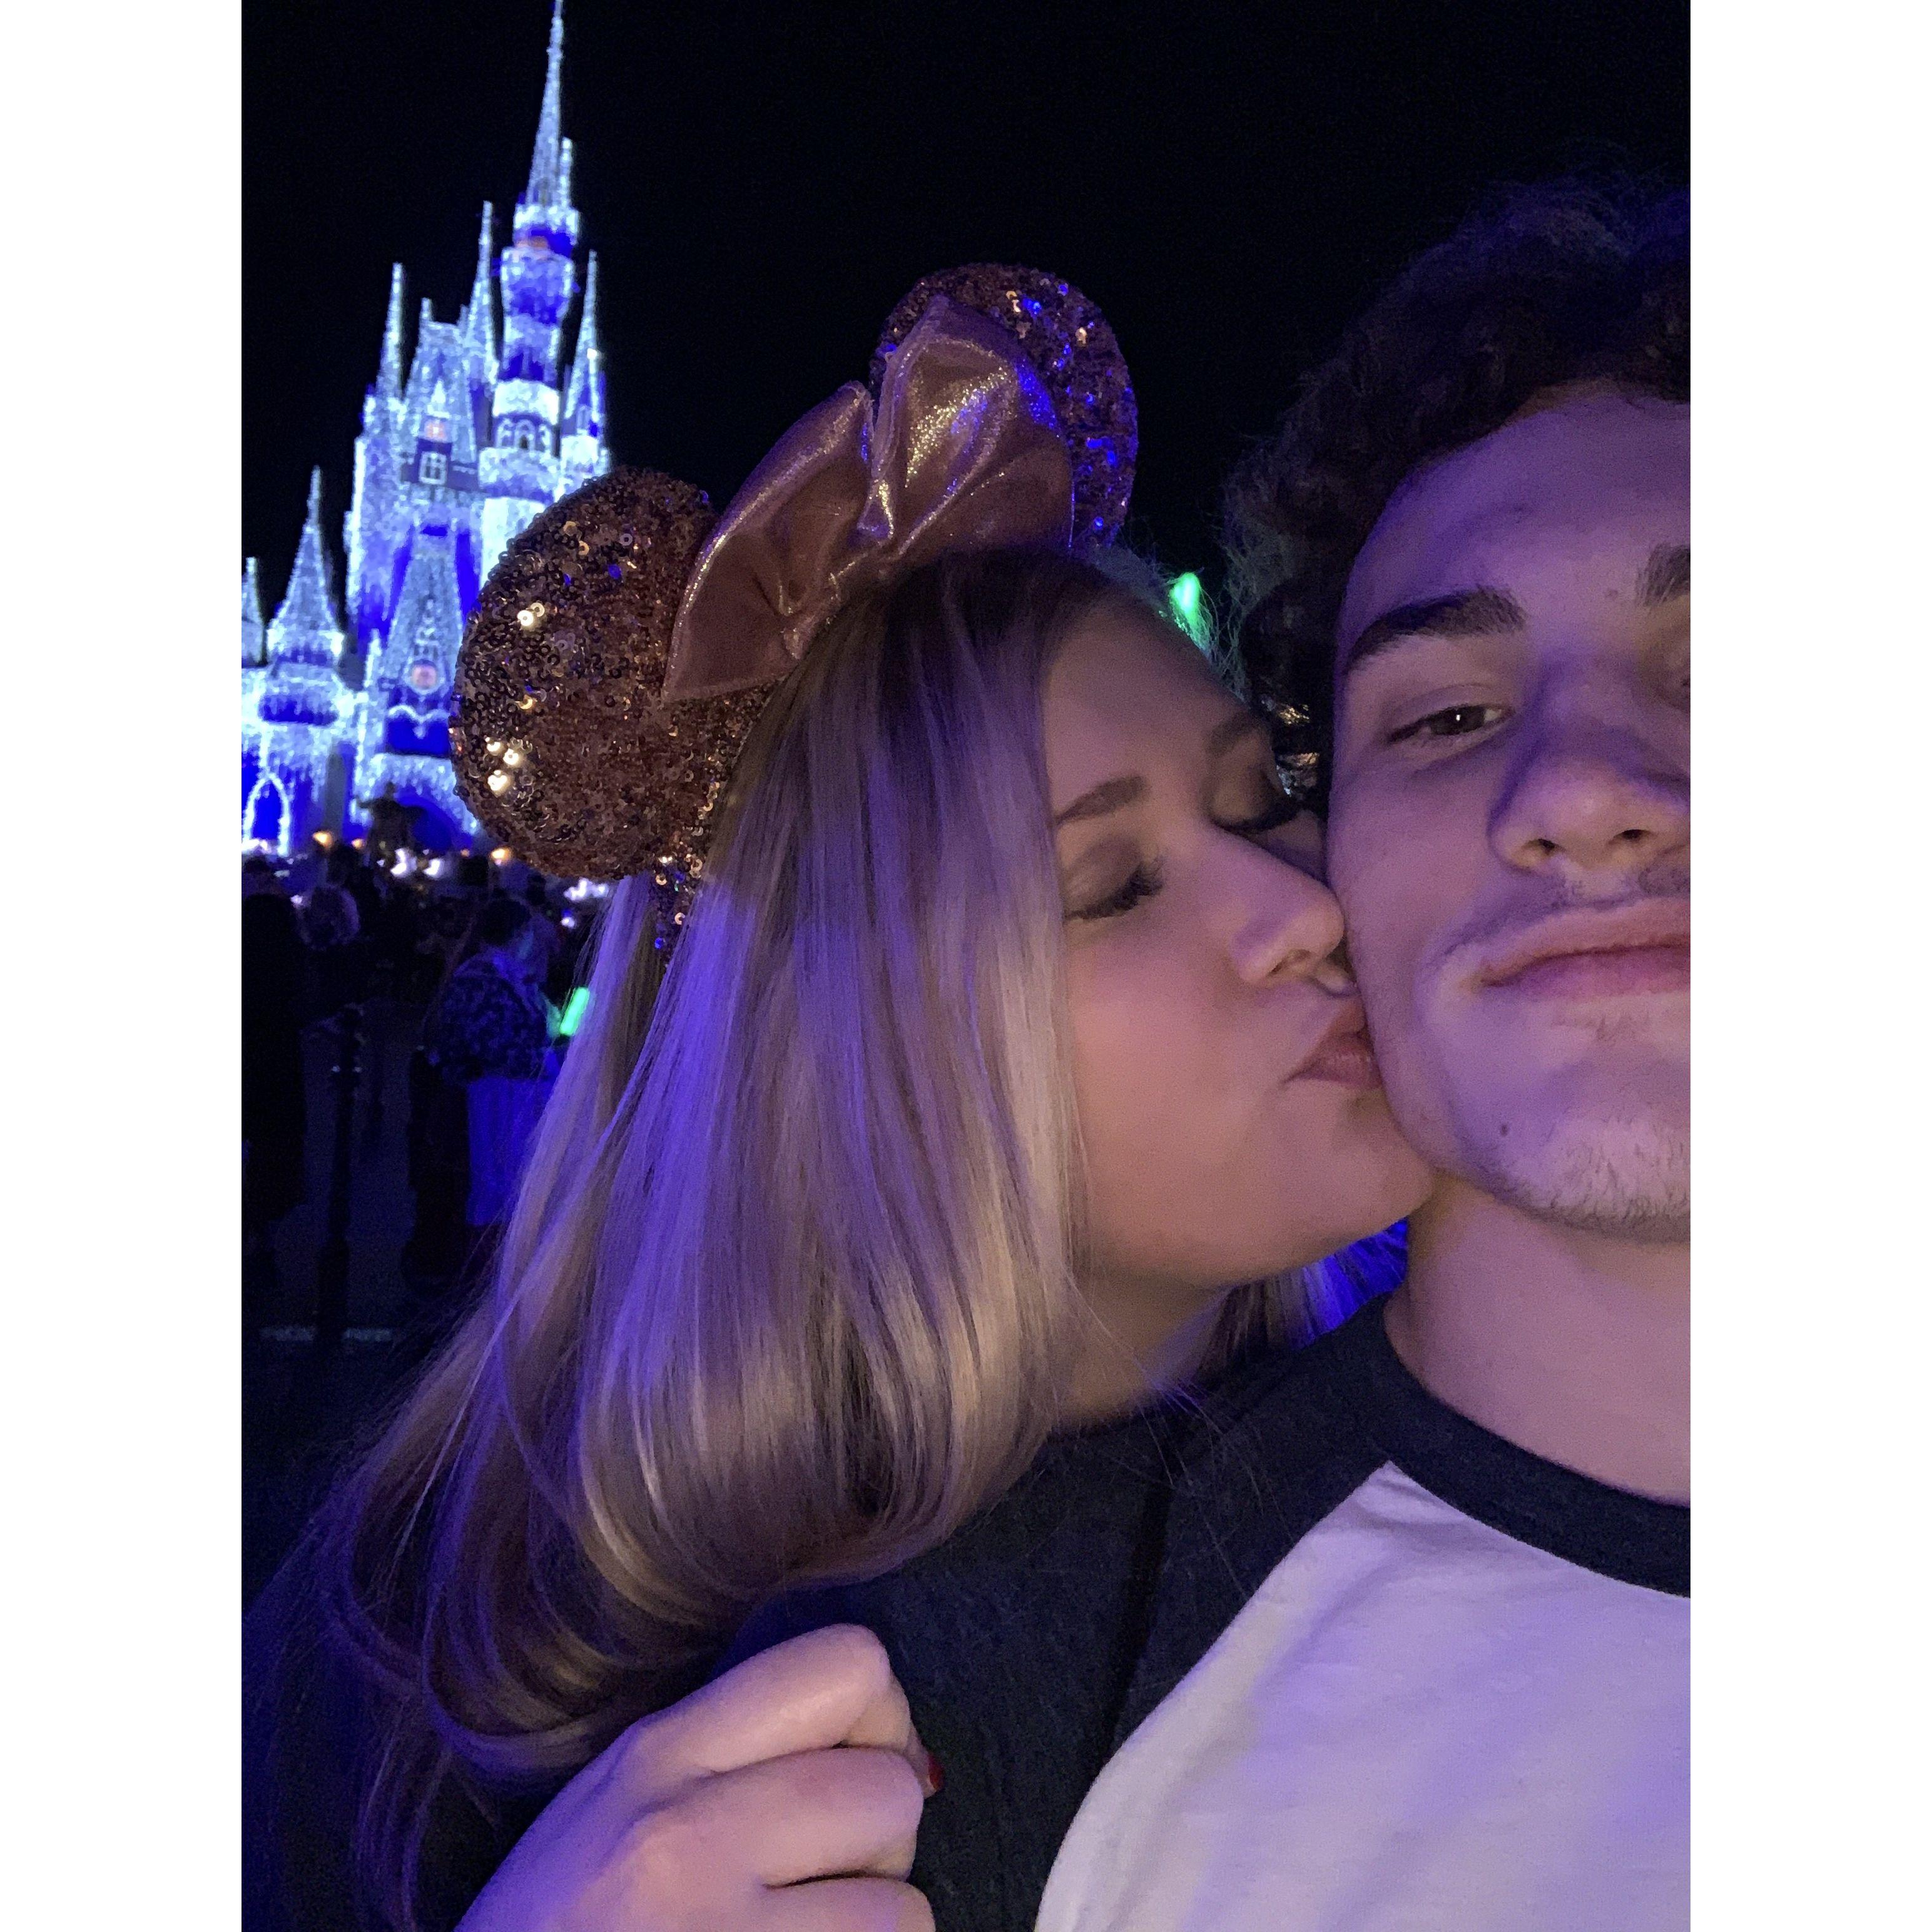 Our first Disney trip, December 2018